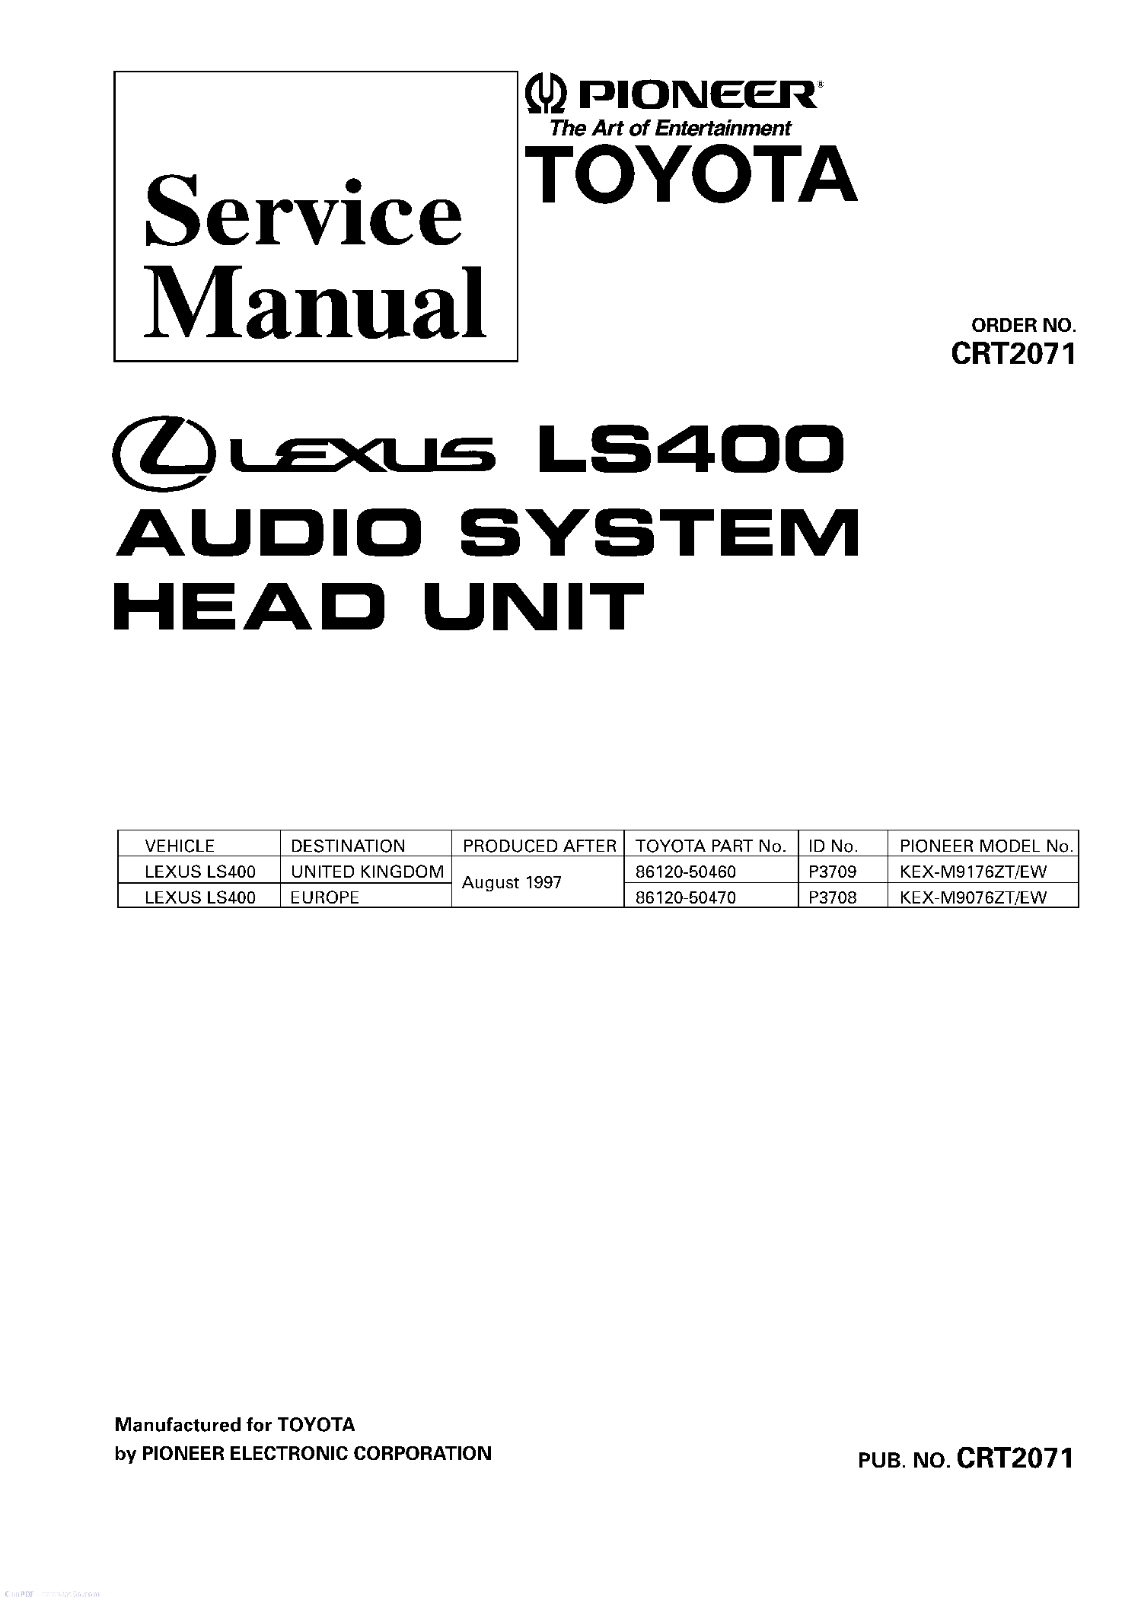 Pioneer KEXM-9076-ZT, KEXM-9076-ZT-91, KEXM-9176-ZT, KEXM-9176-ZT-91 Service manual